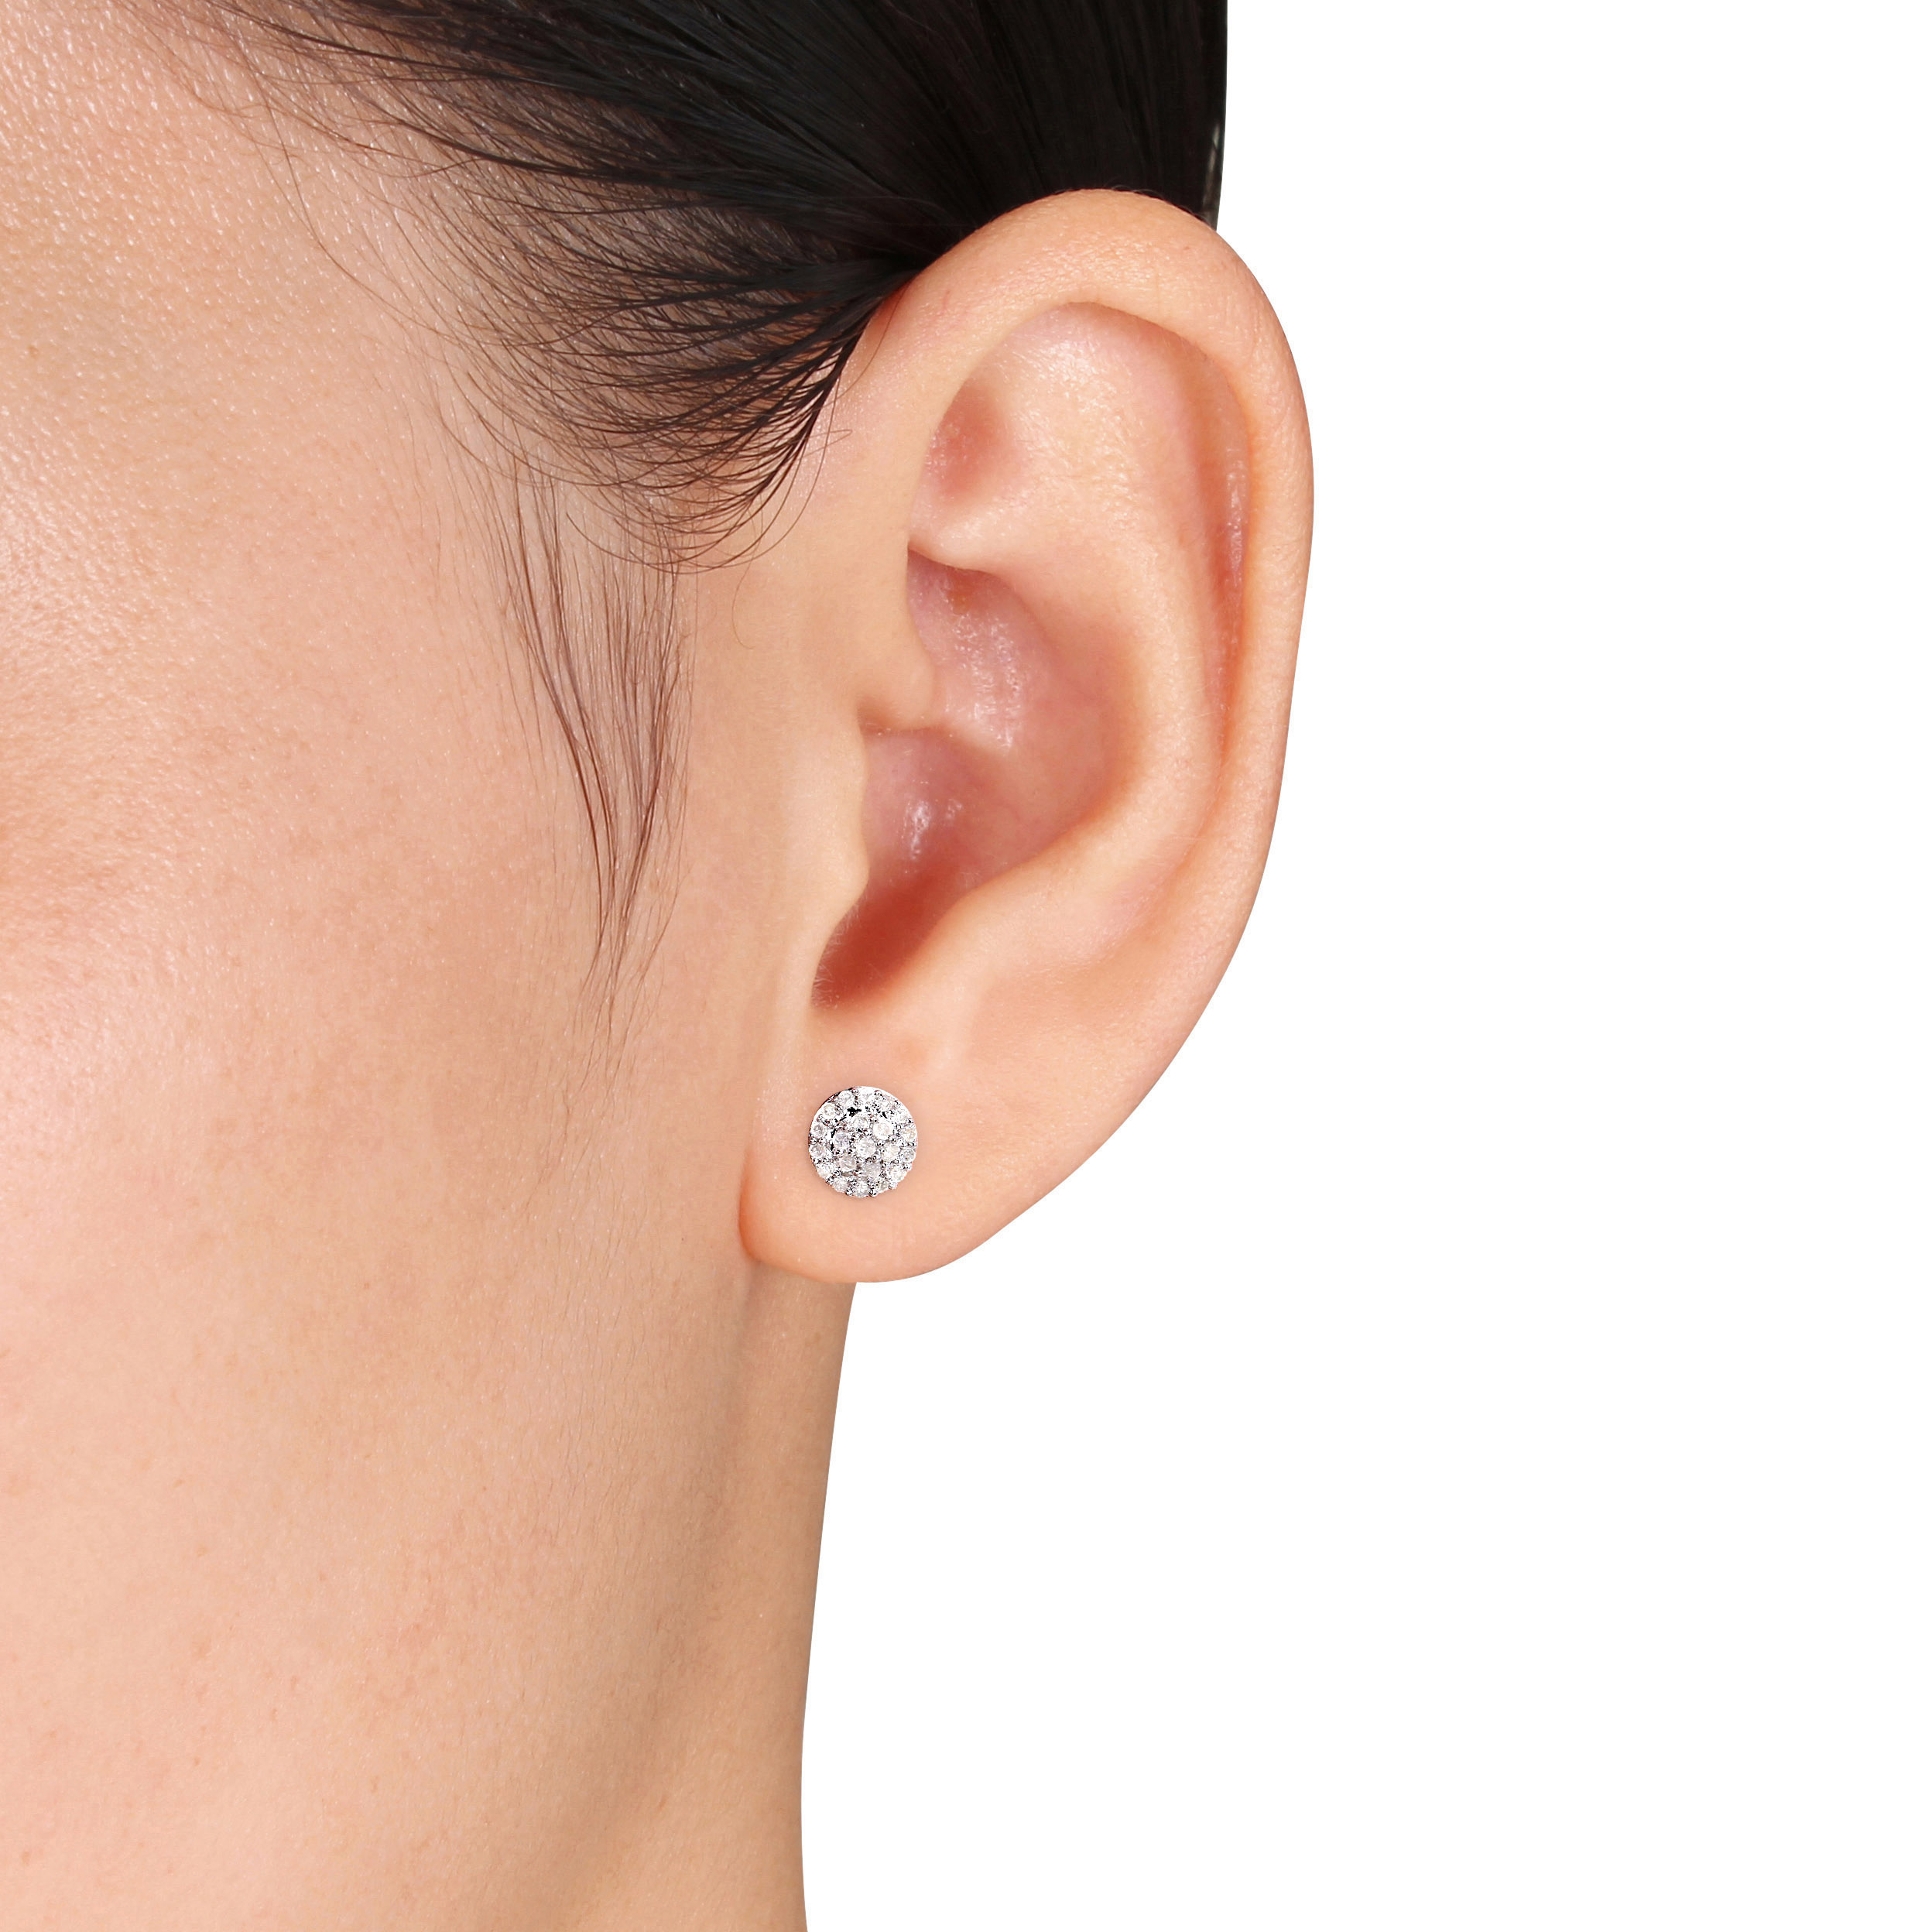 1/4 CT TW Diamond Cluster Halo Stud Earrings in Sterling Silver